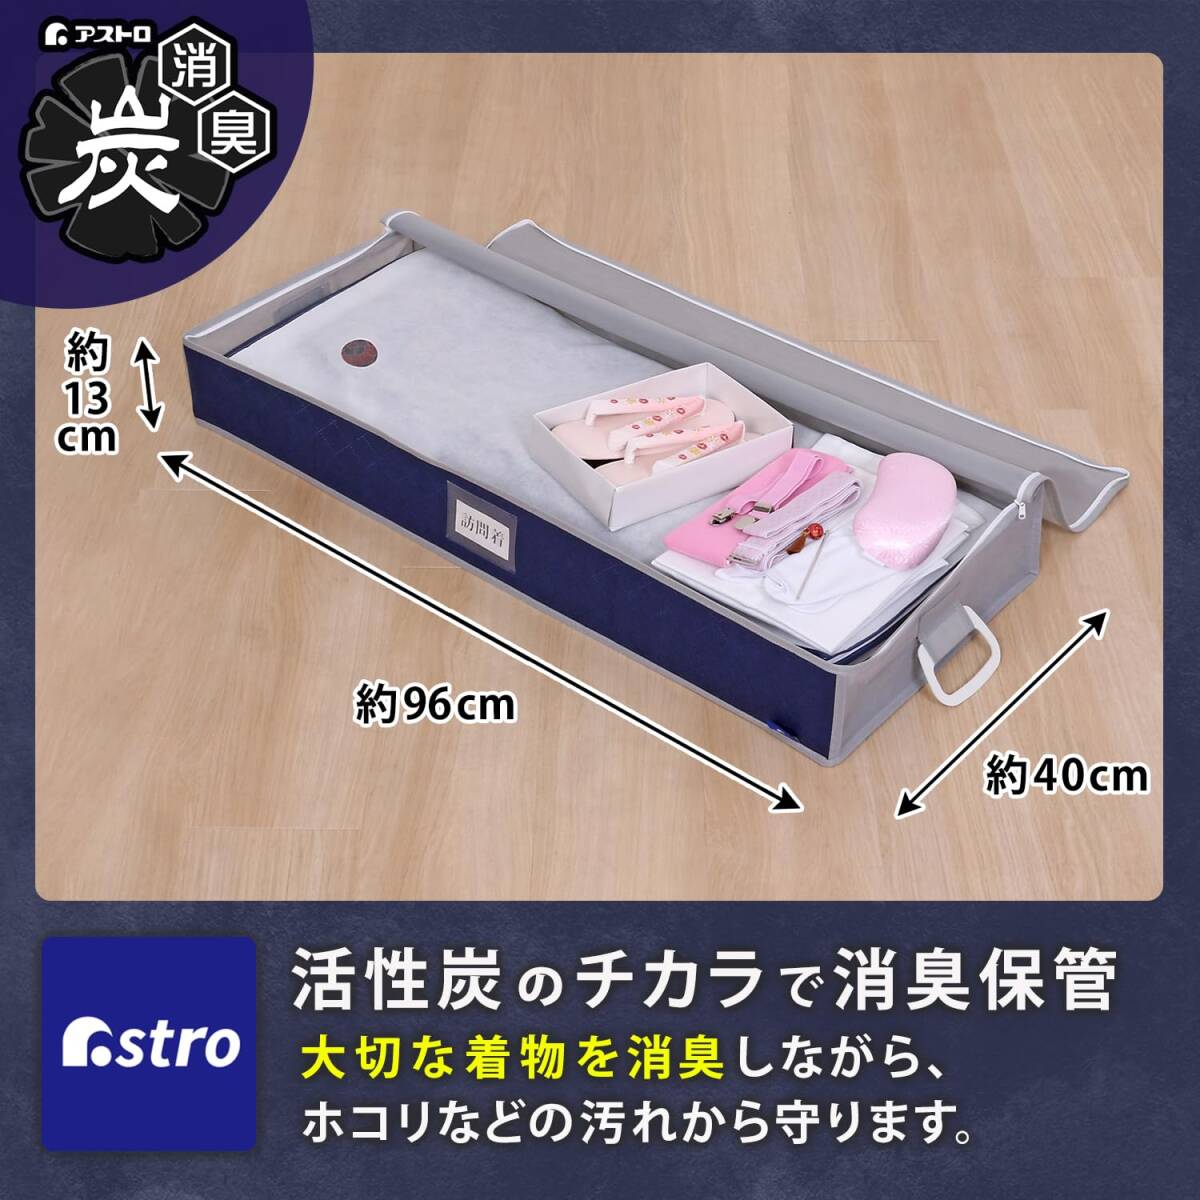  Astro kimono storage case gray × navy non-woven activated charcoal deodorization ..615-22